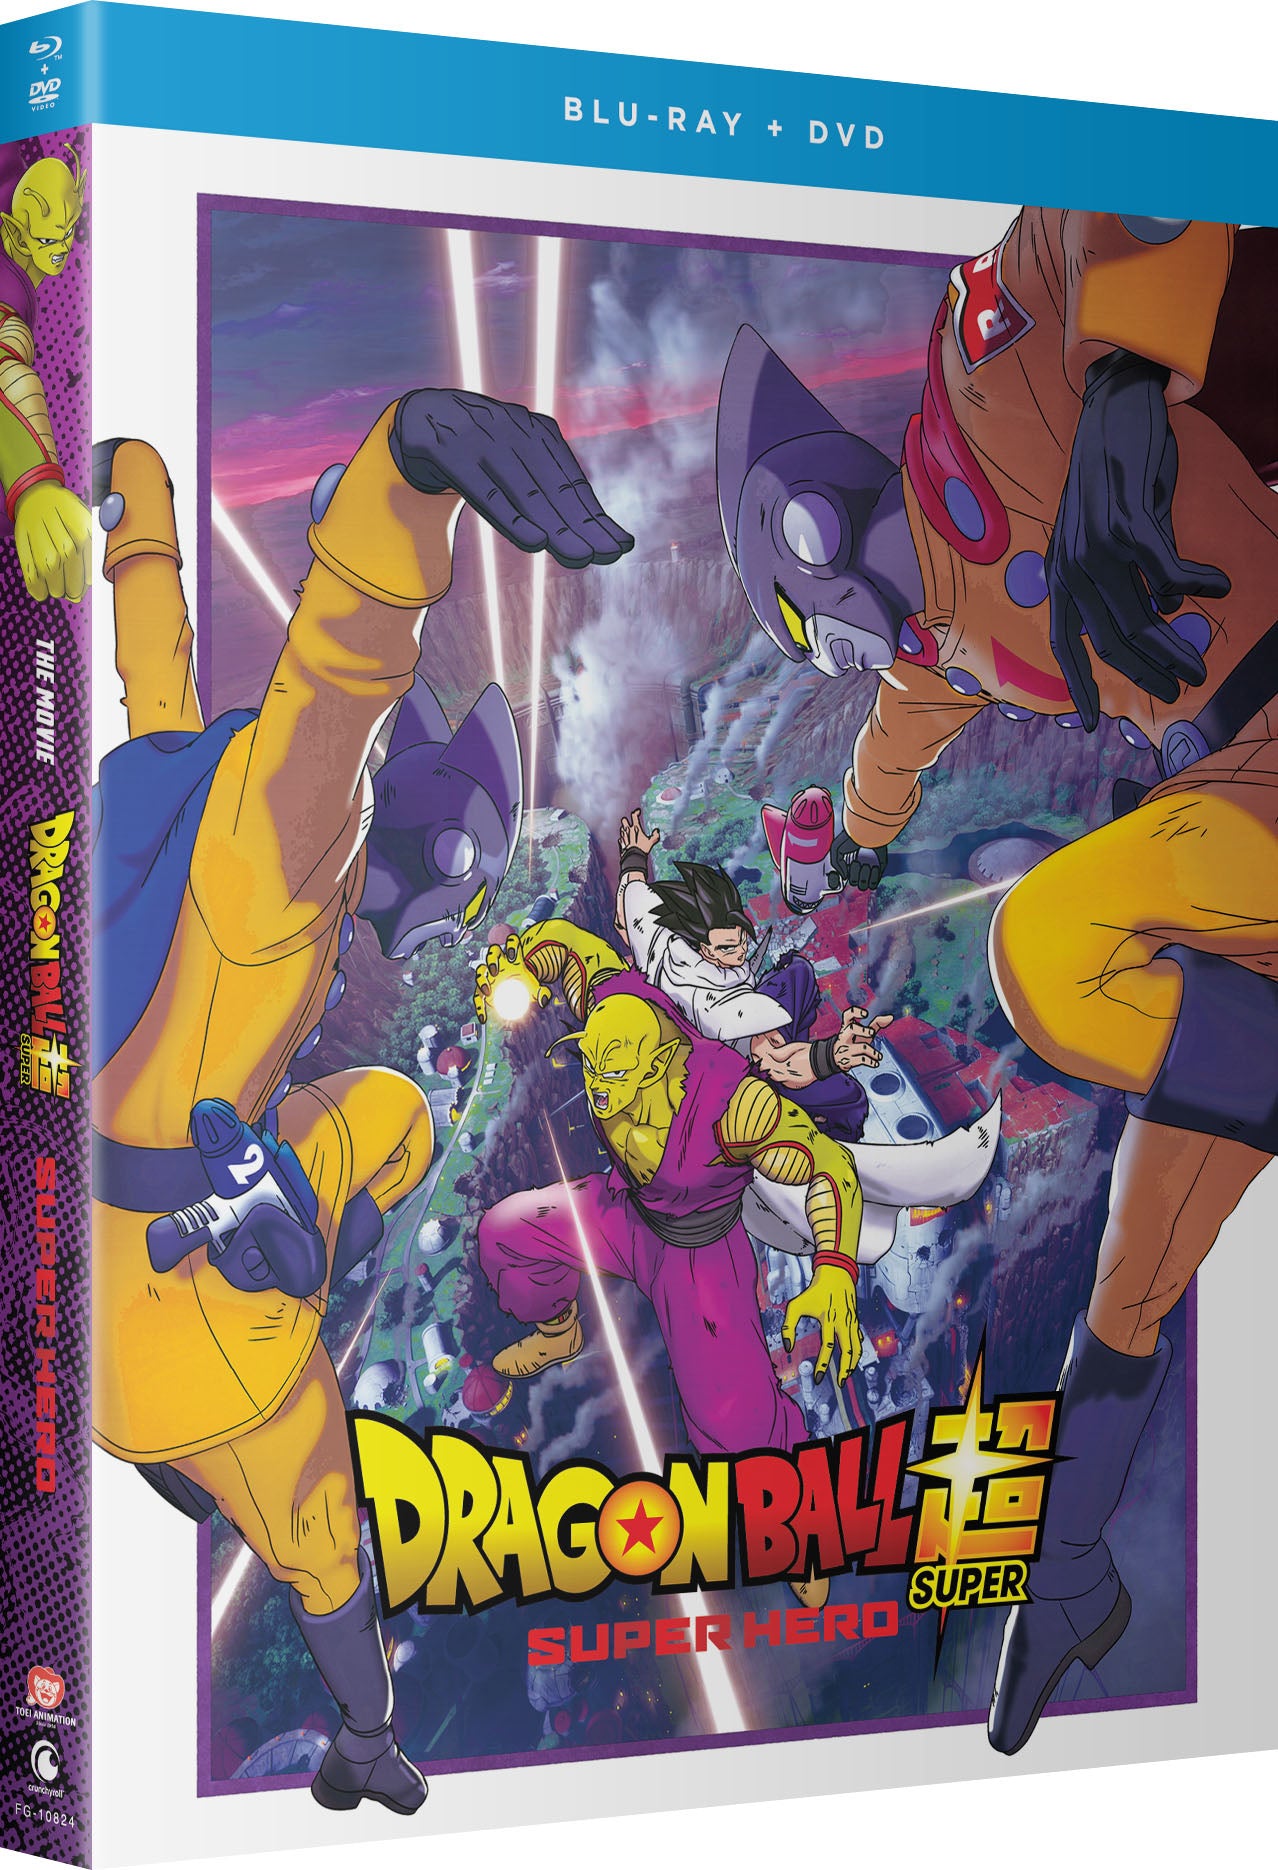 Dragon Ball Super: Super Hero [Blu-ray] cover art